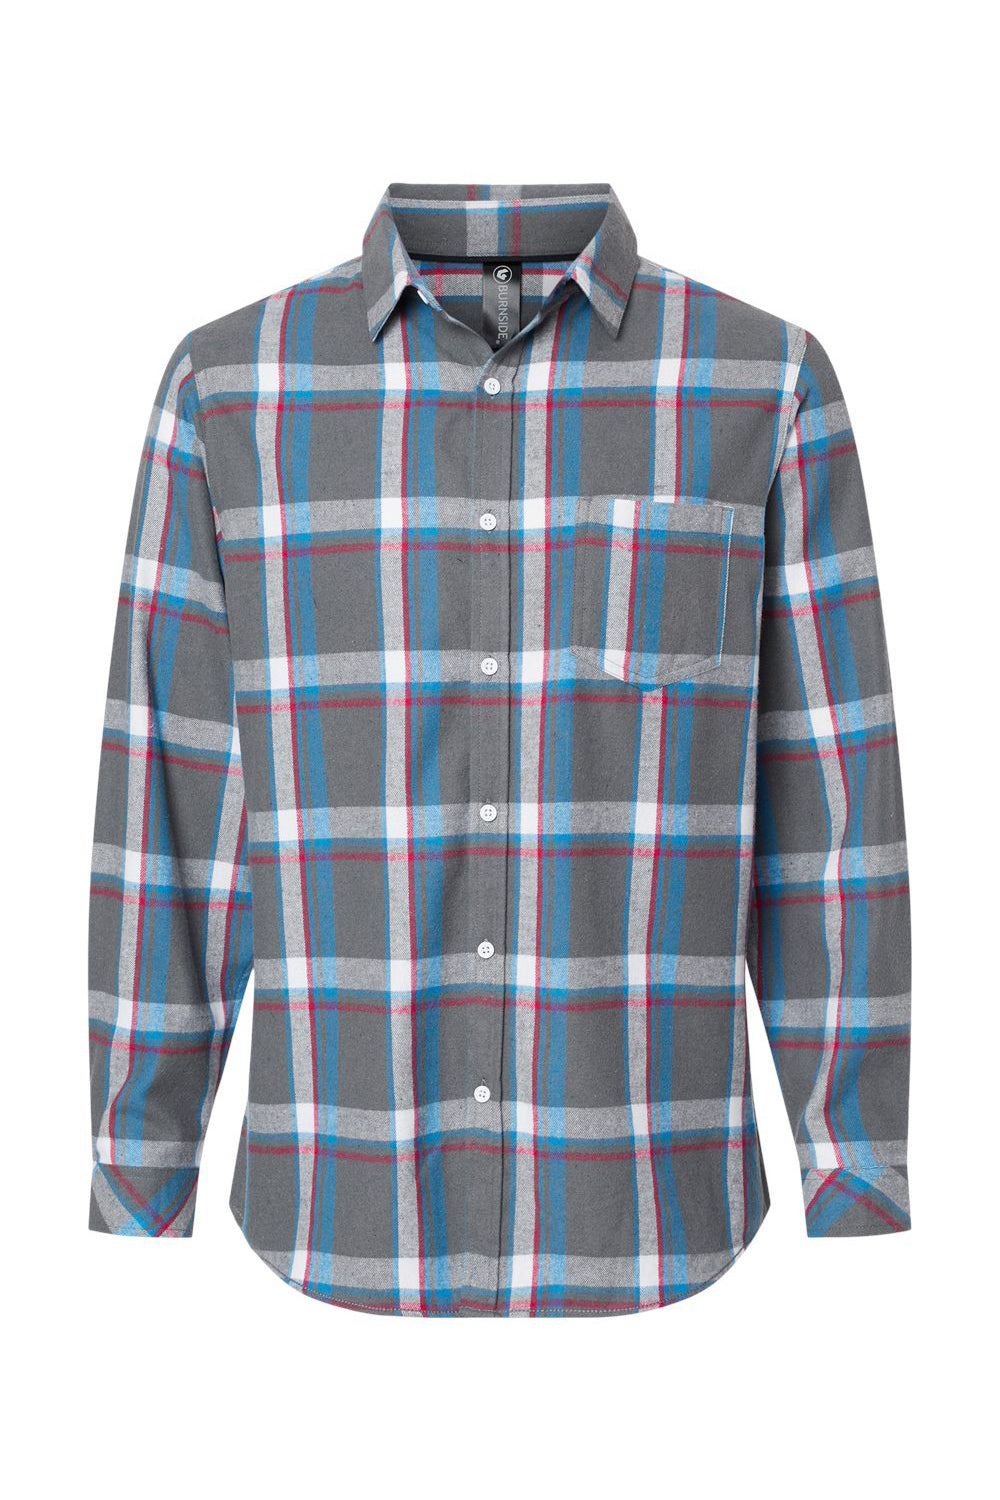 Burnside B8212 Mens Flannel Long Sleeve Button Down Shirt w/ Pocket Steel/White Flat Front